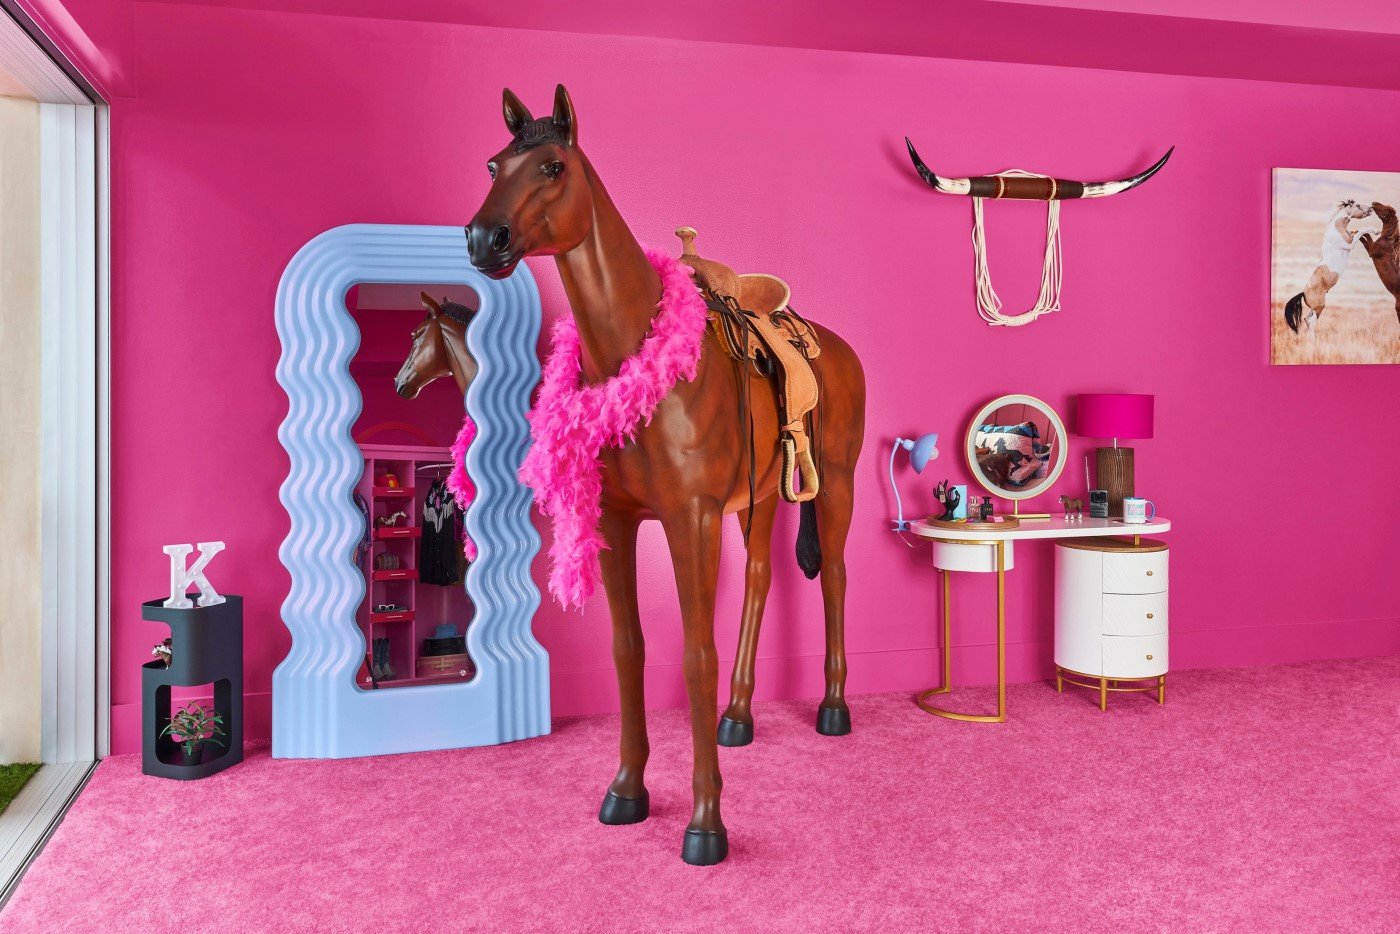 Airbnb Barbie House